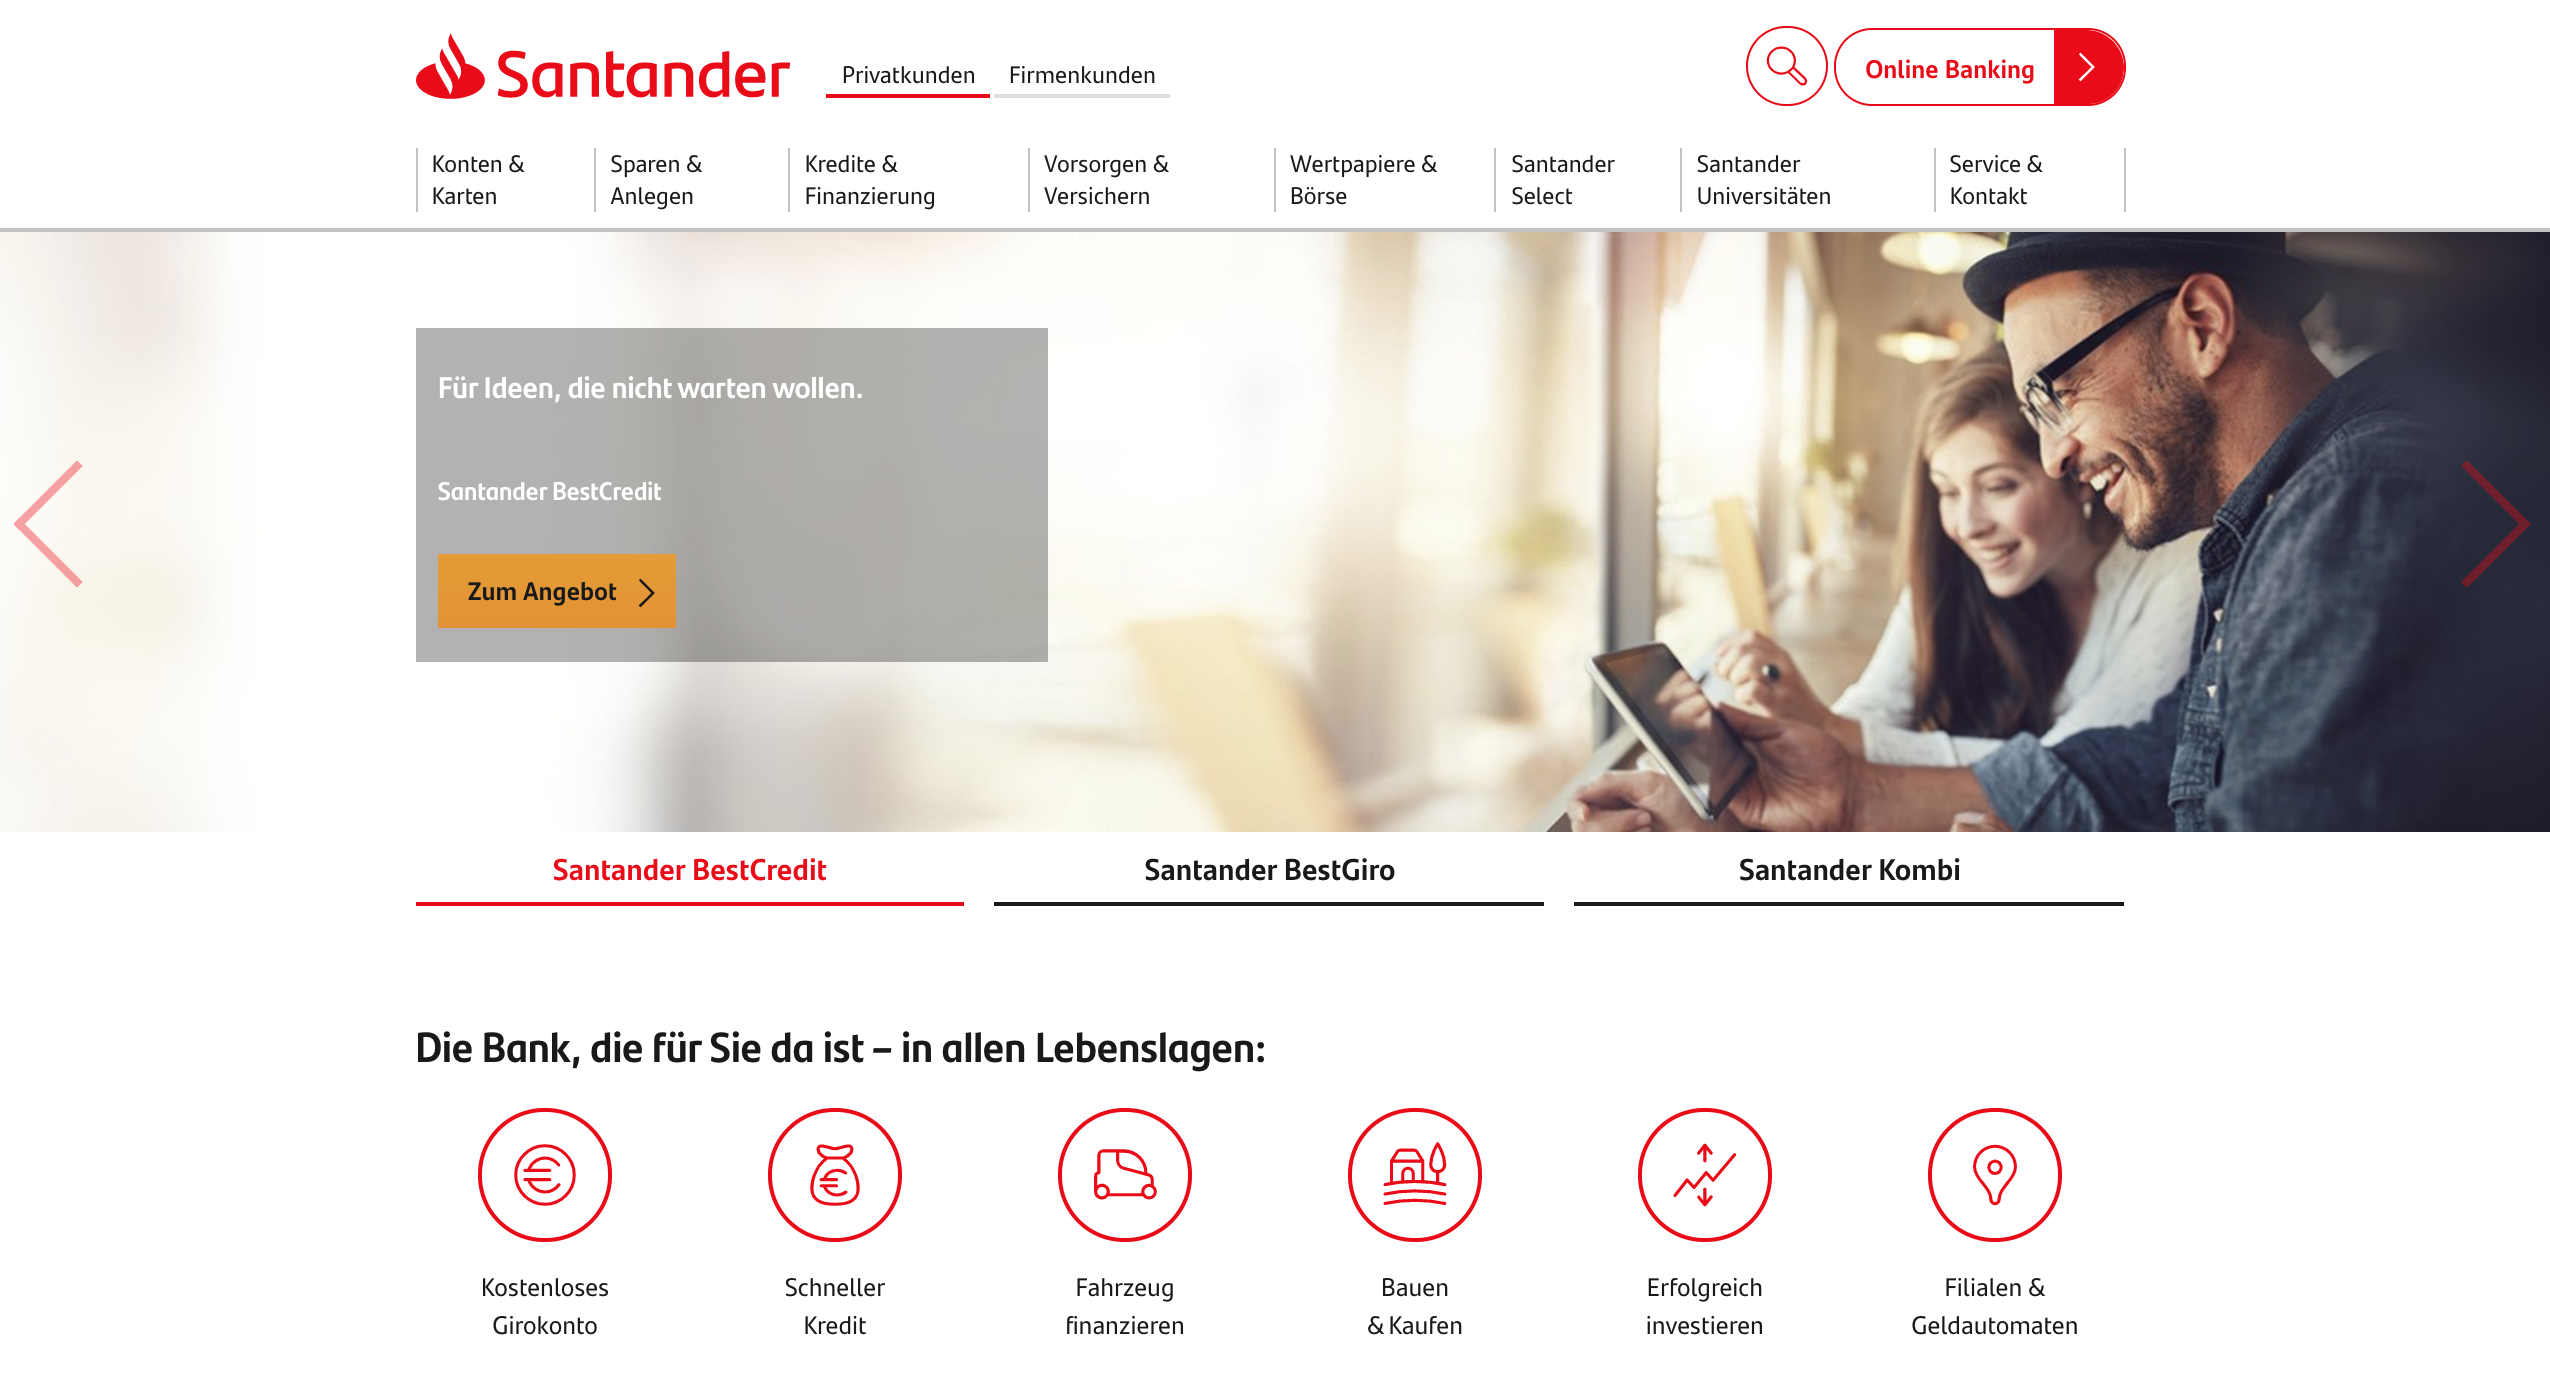 Santander Consumer Bank Website